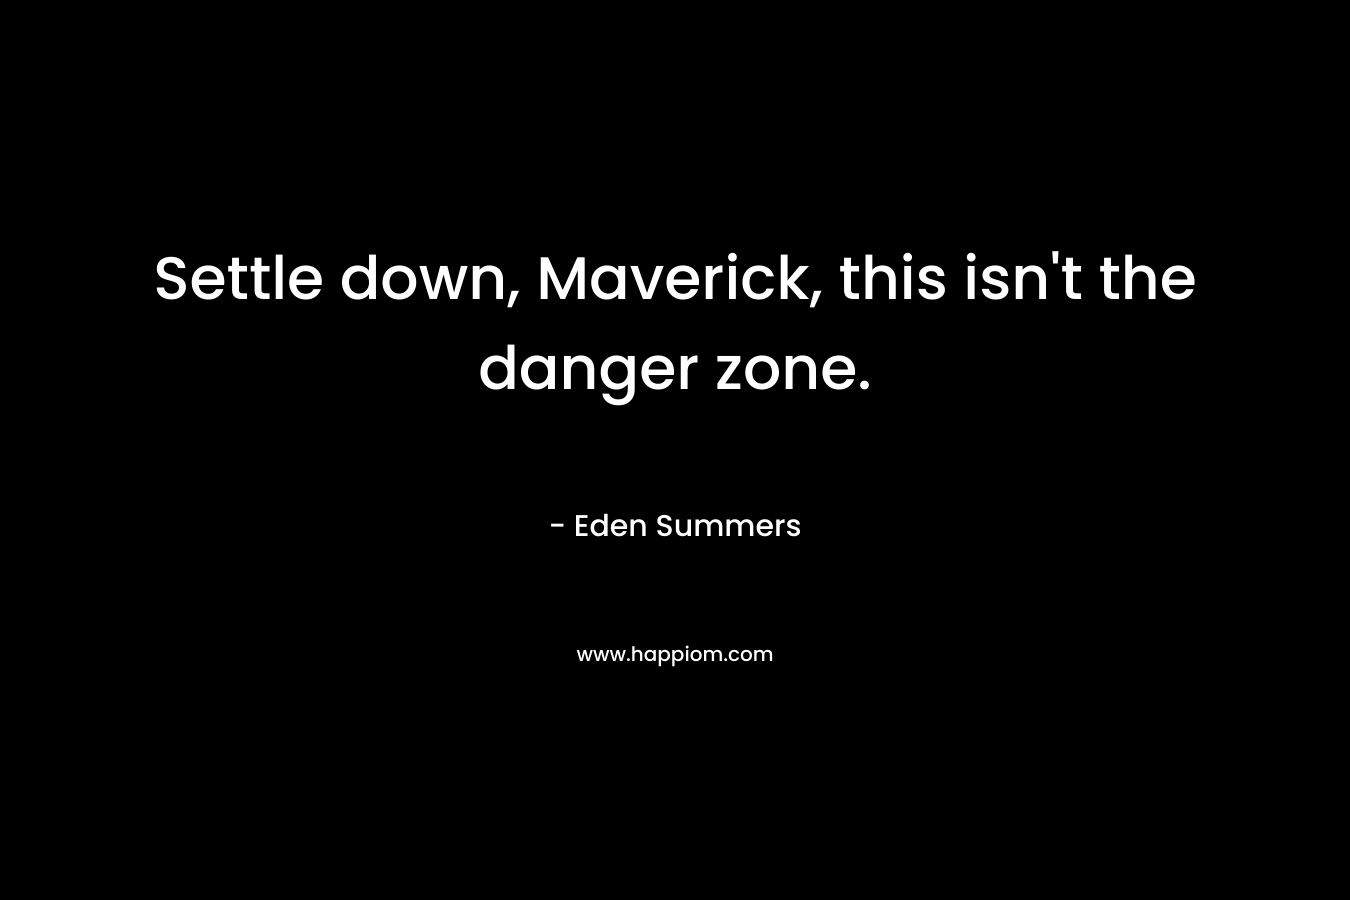 Settle down, Maverick, this isn't the danger zone.